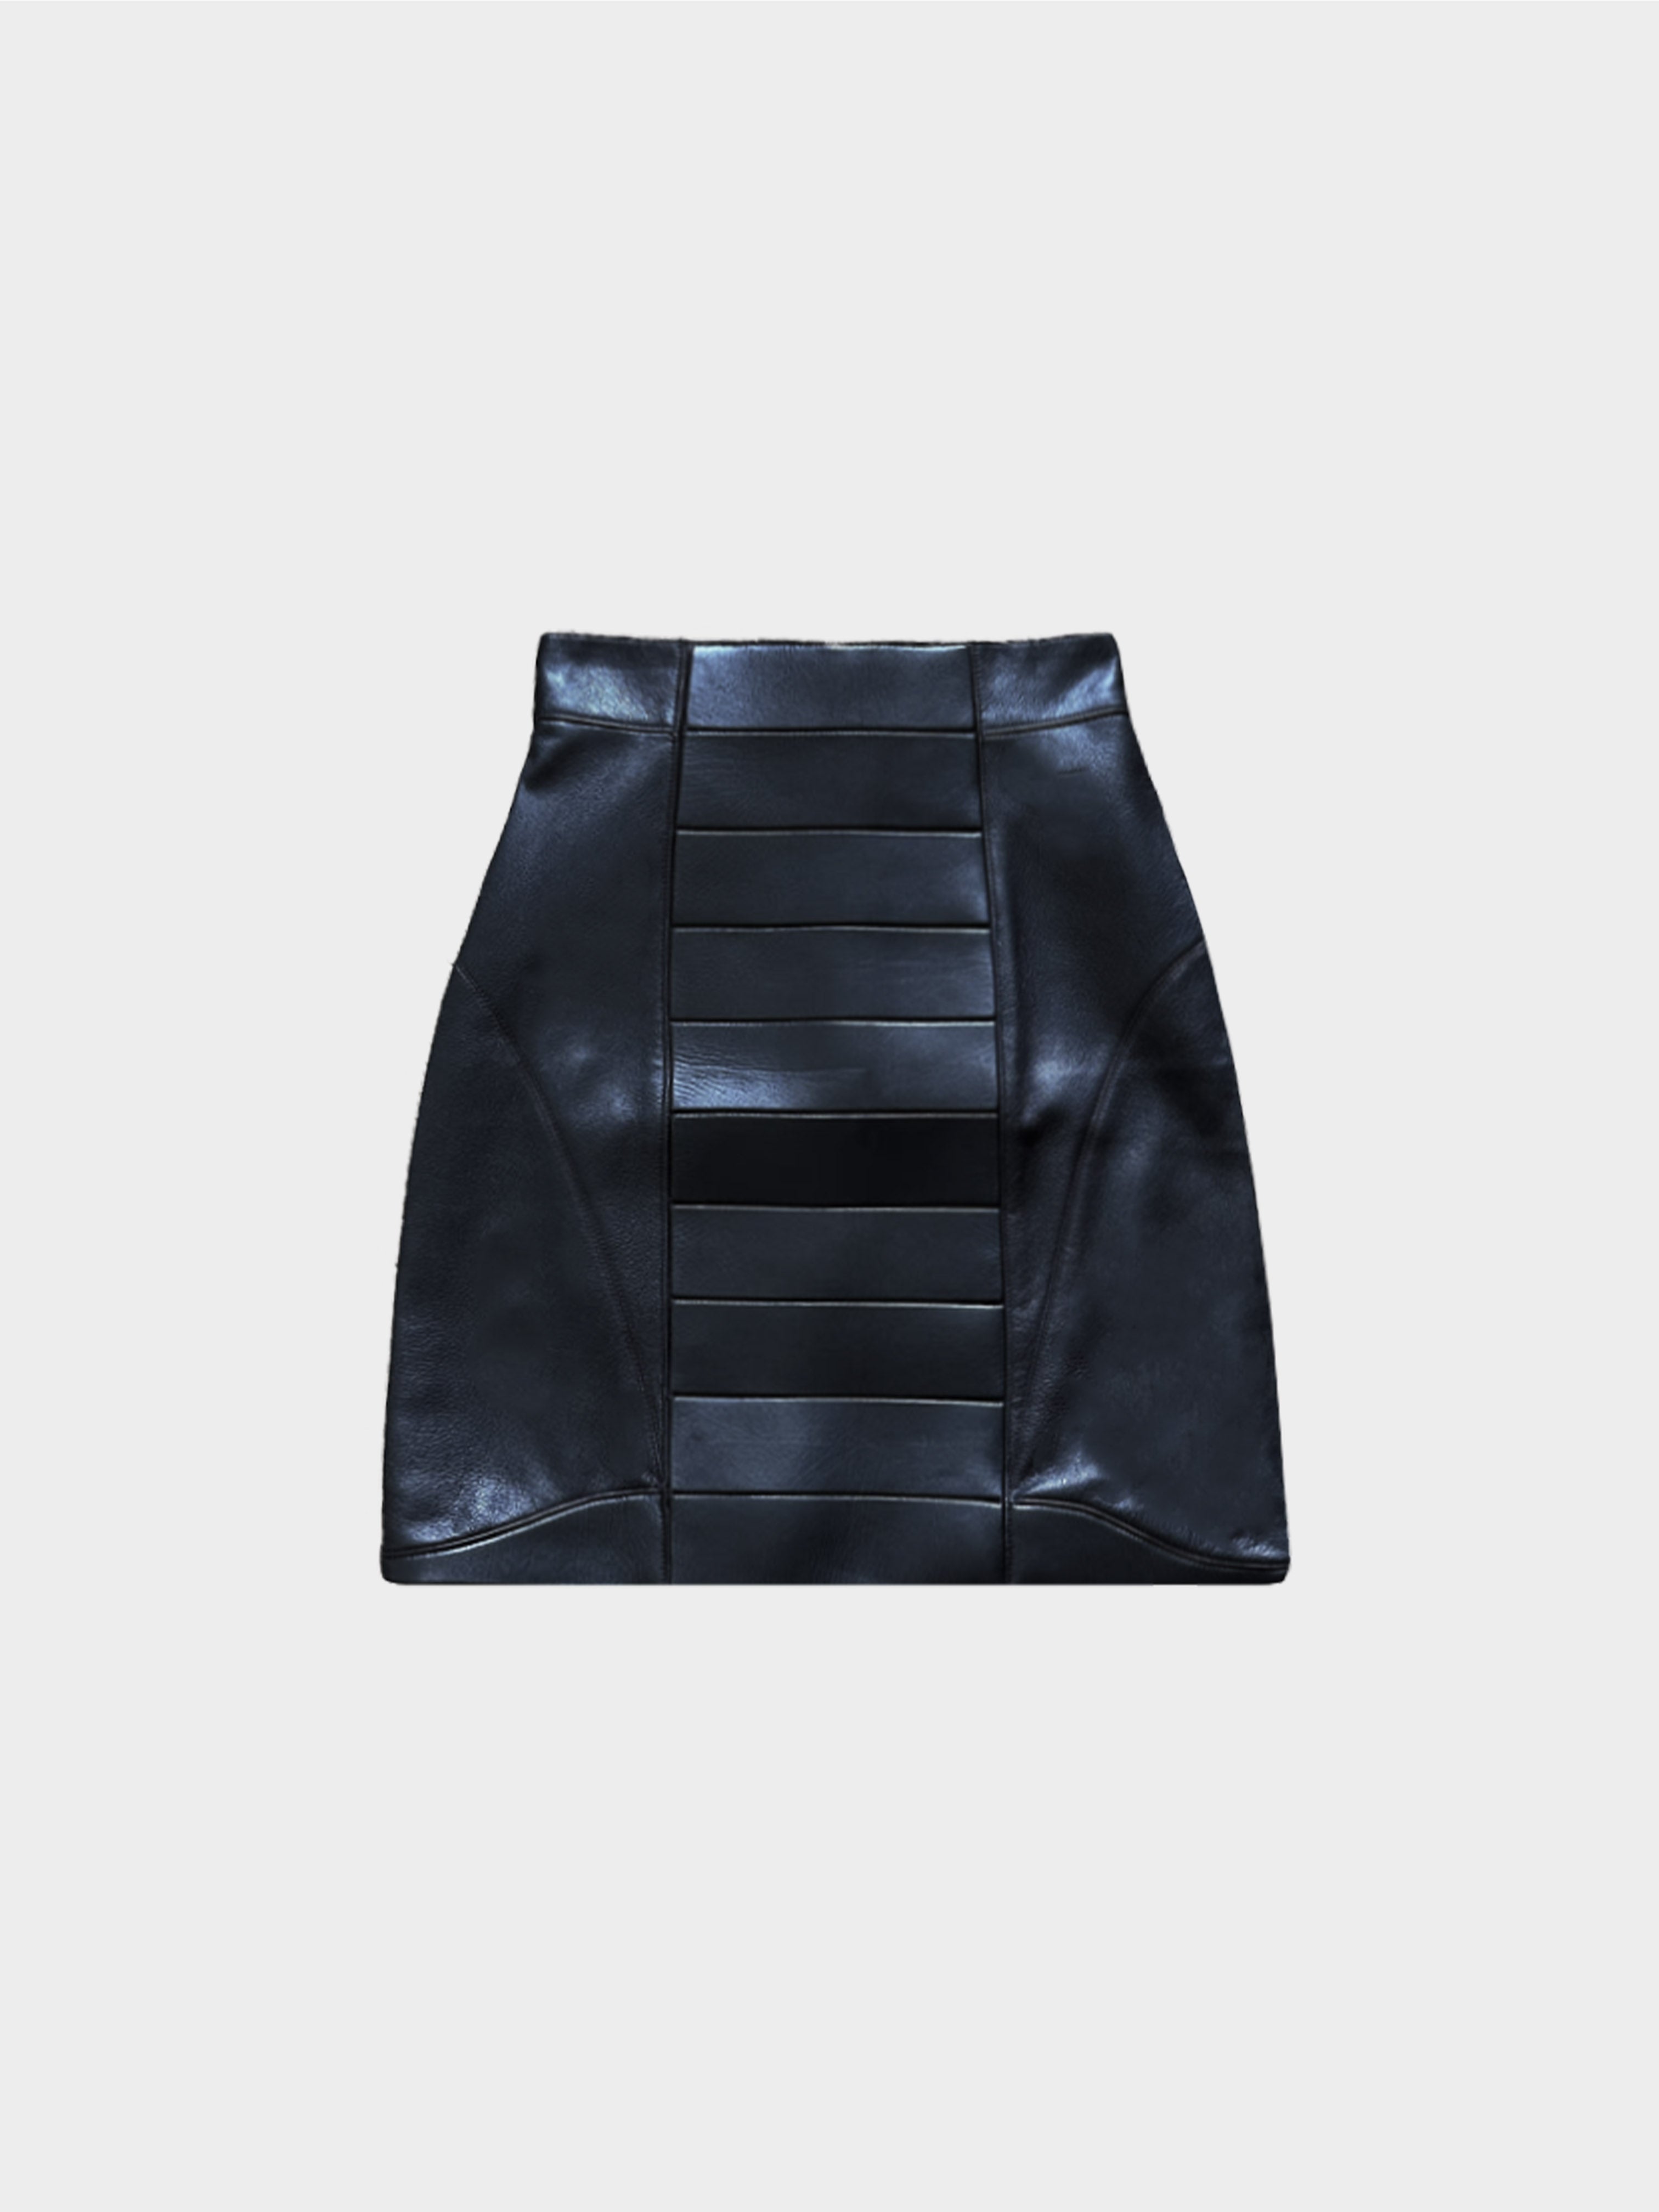 Louis Vuitton 2010s Black Leather Prototype Paneled Skirt